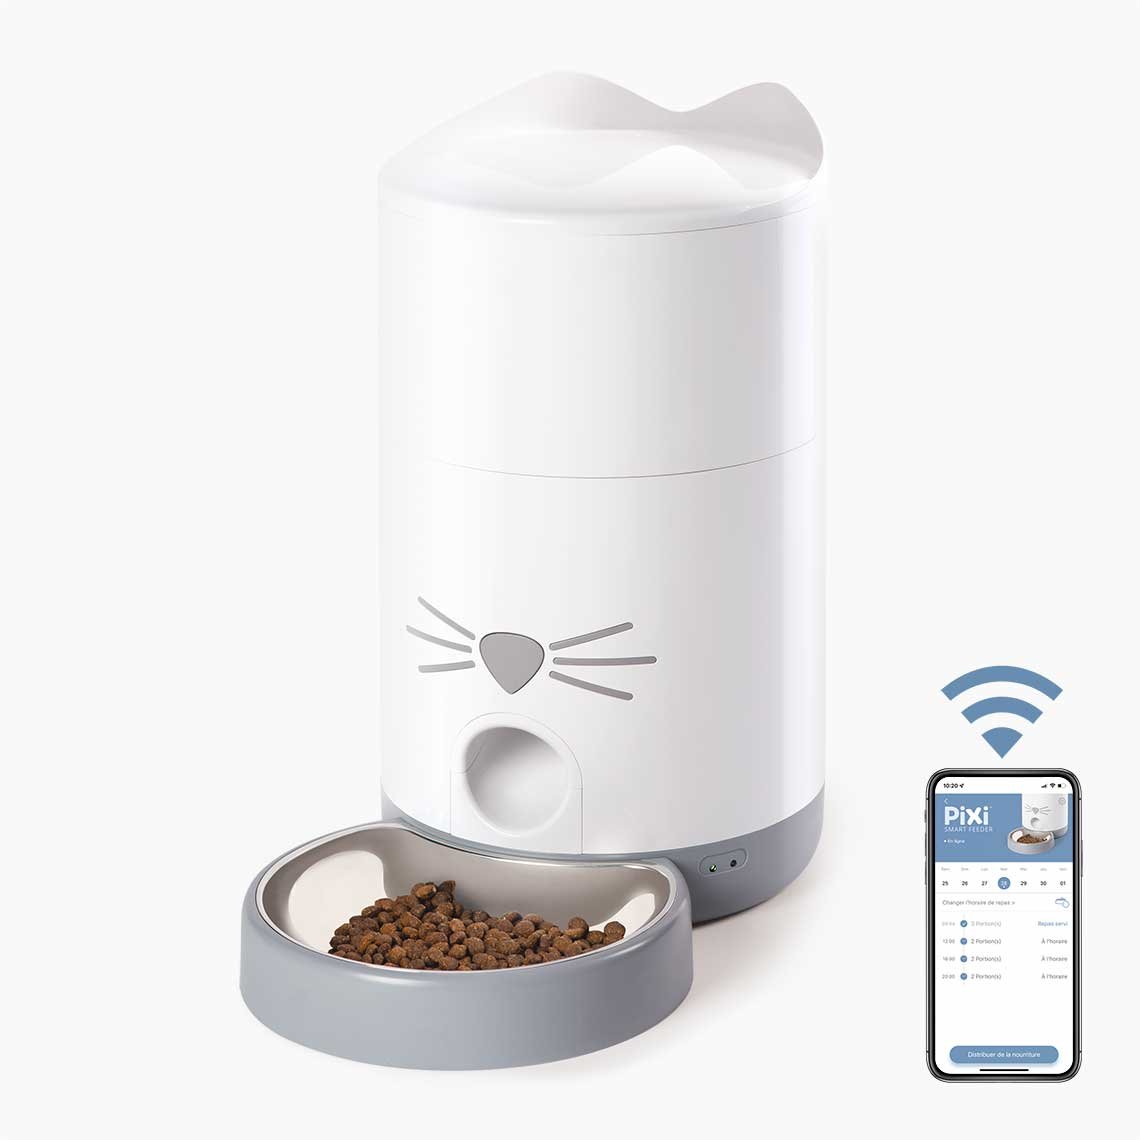 Comedero inteligente para gatos con wifi integrado - 2,9 L - Catit Pixi